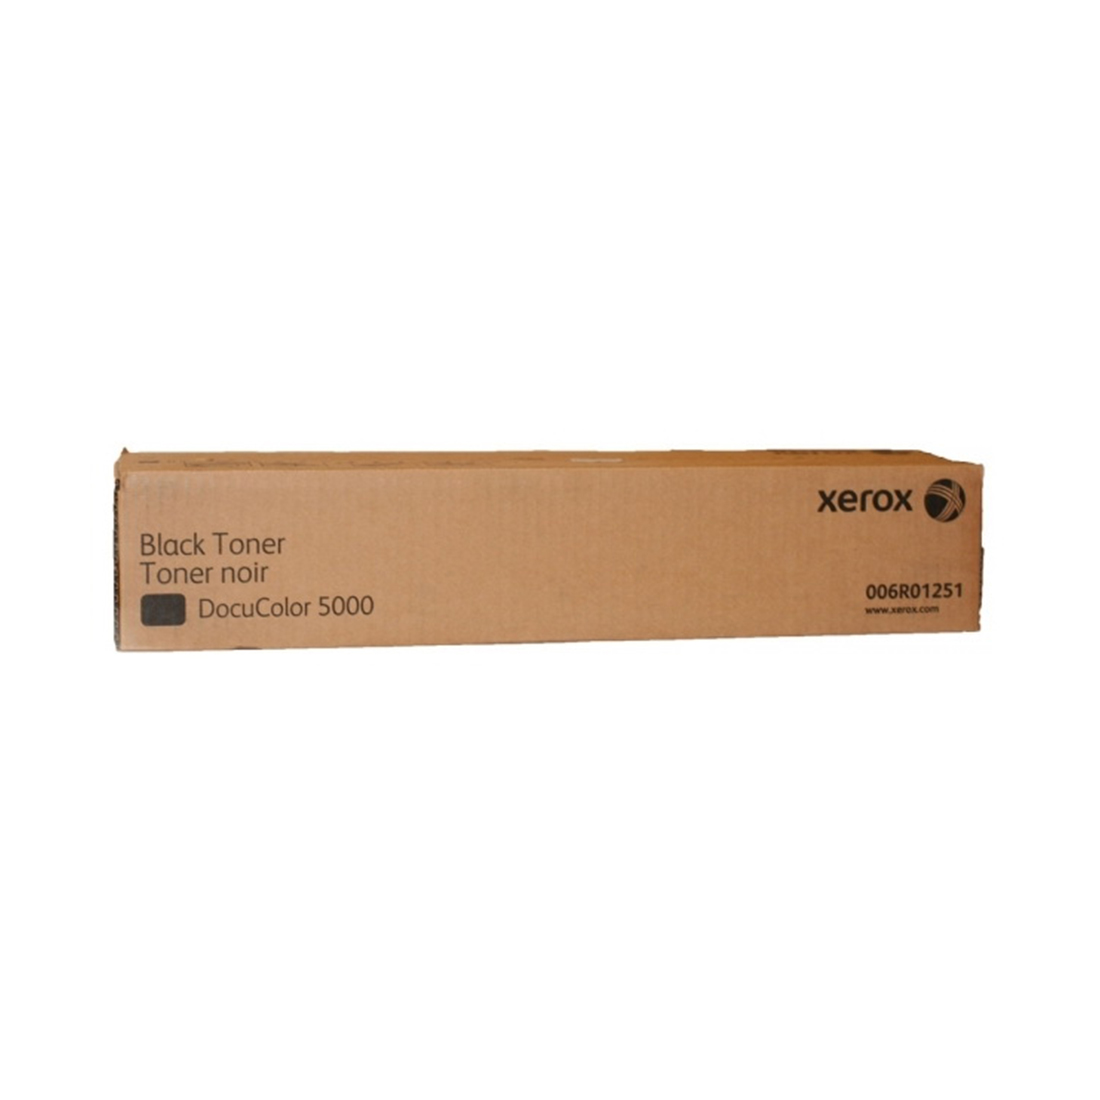 Тонер-картридж (двойная упаковка), Xerox, 006R01251 (чёрный), Для Xerox Docucolor 5000, 37 500*2 стр